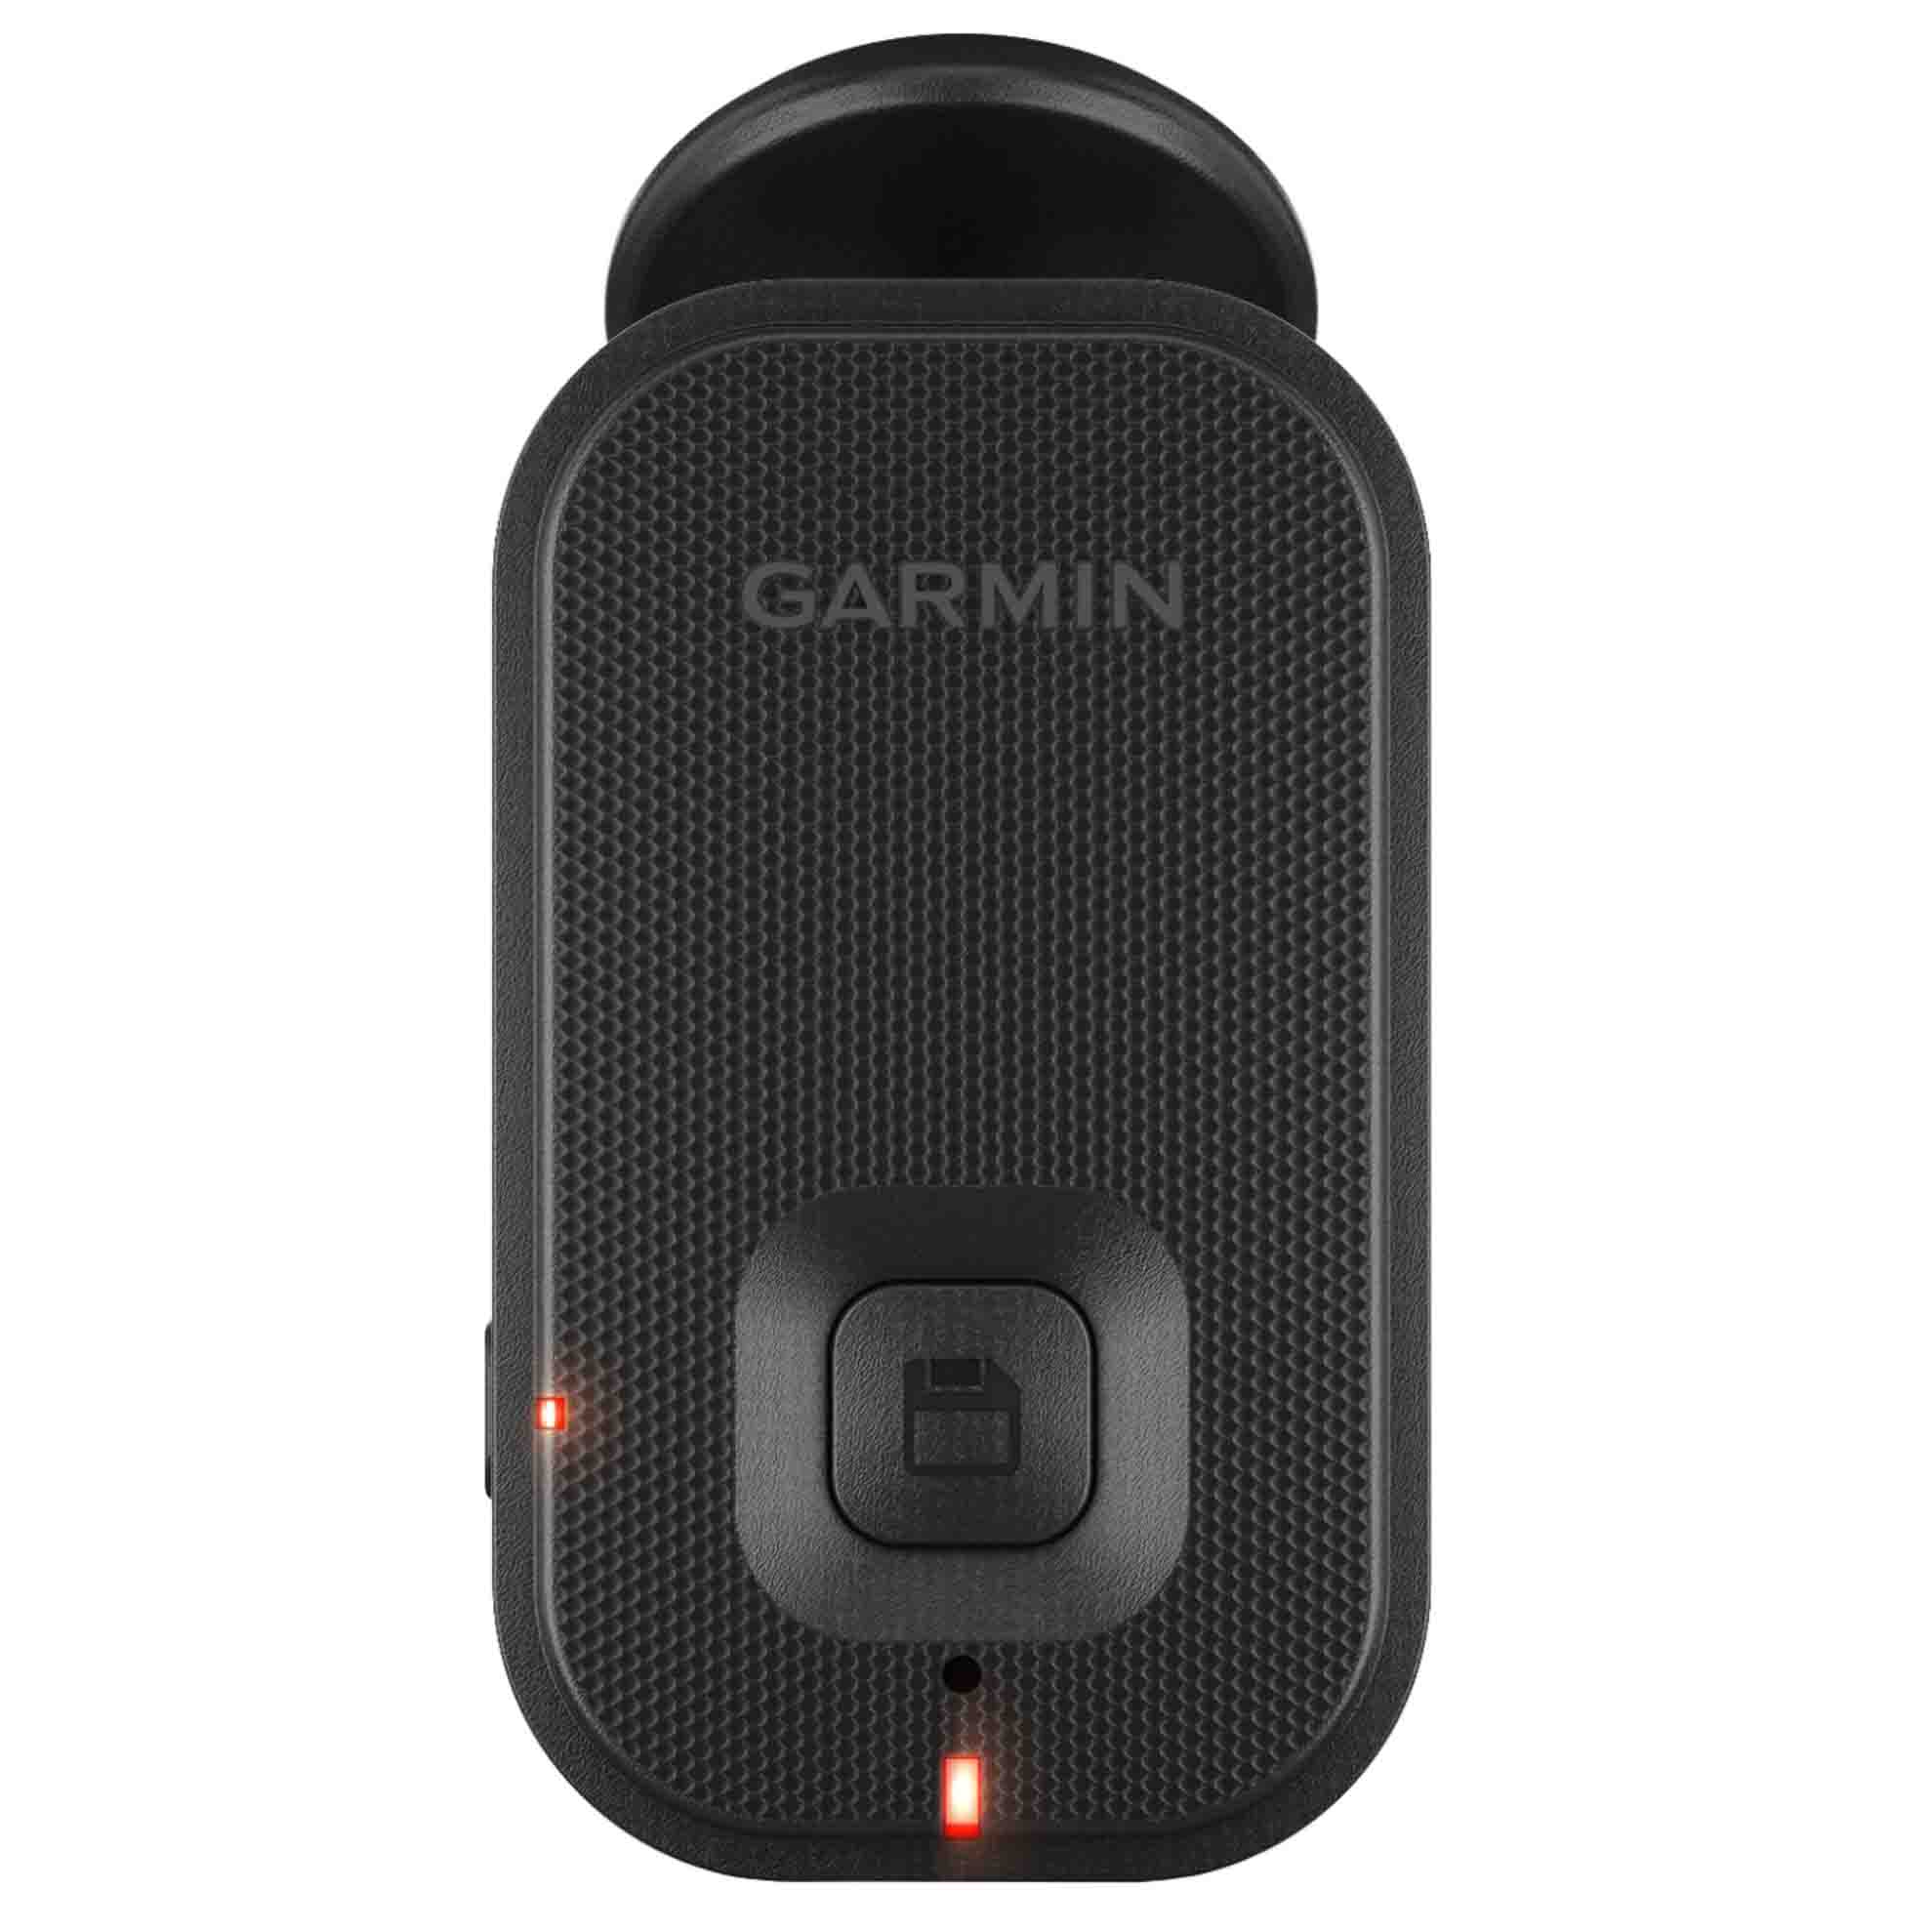 rectangle-shaped Garmin dashcam in black